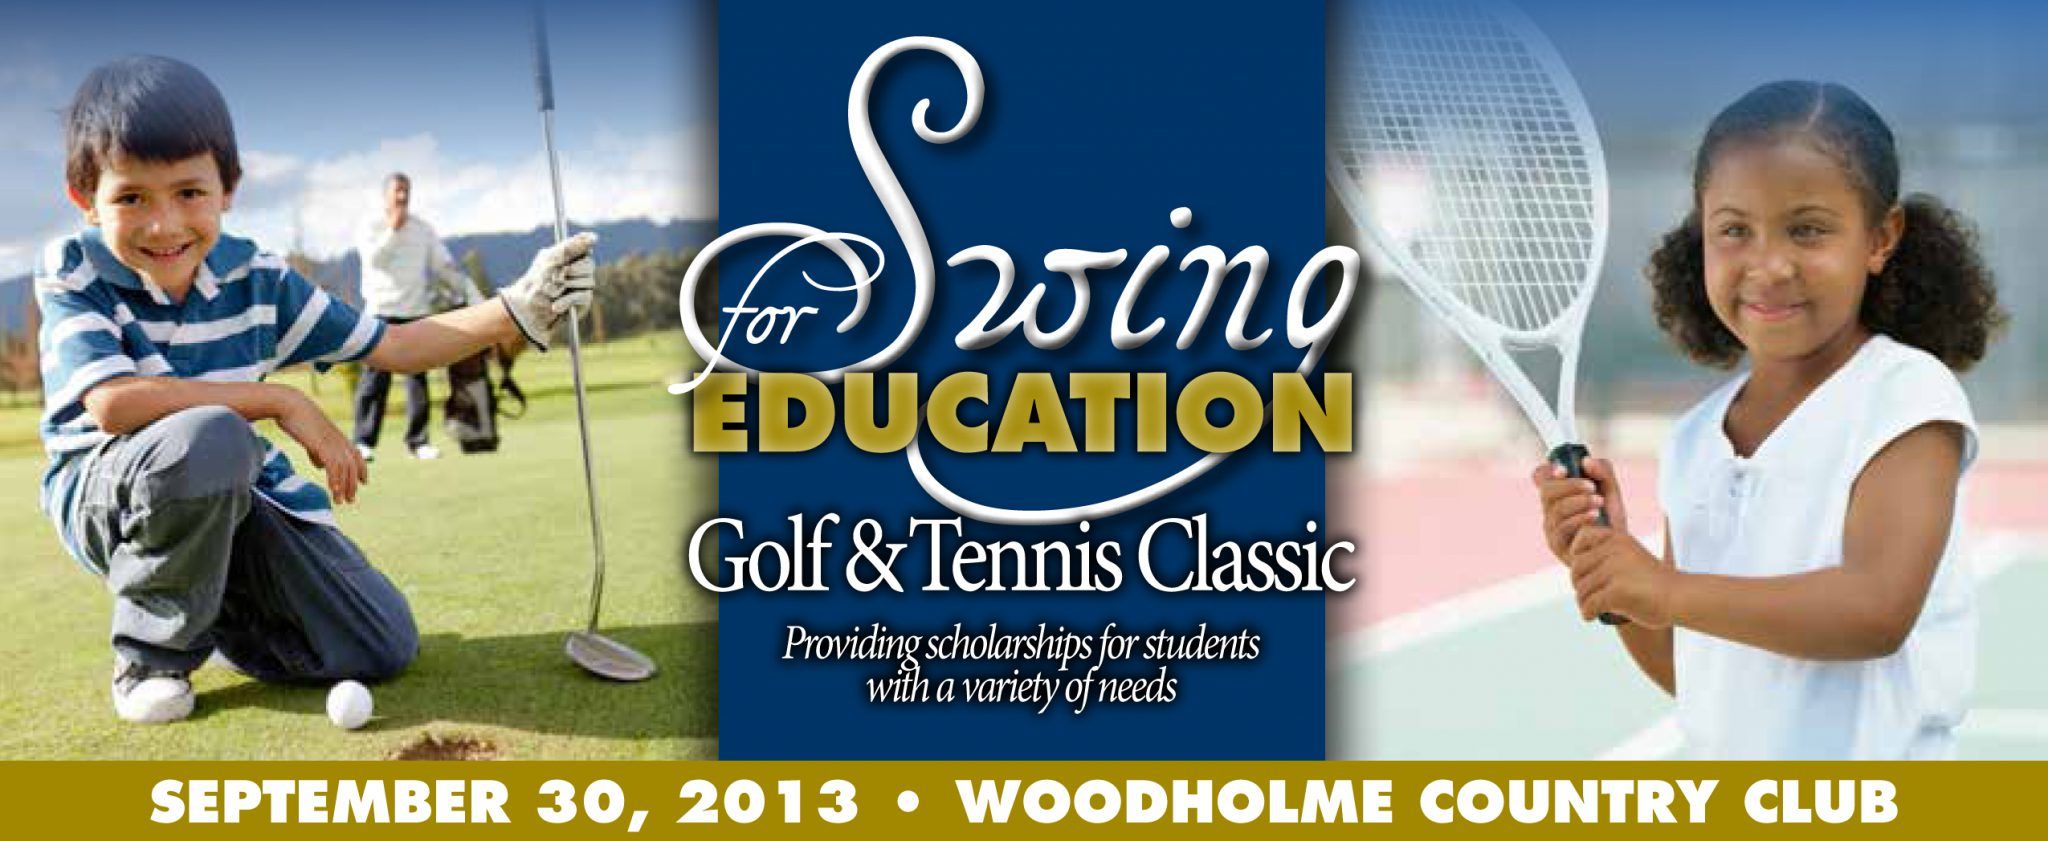 Swing for Education Golf & Tennis Classic: September 30, 2013